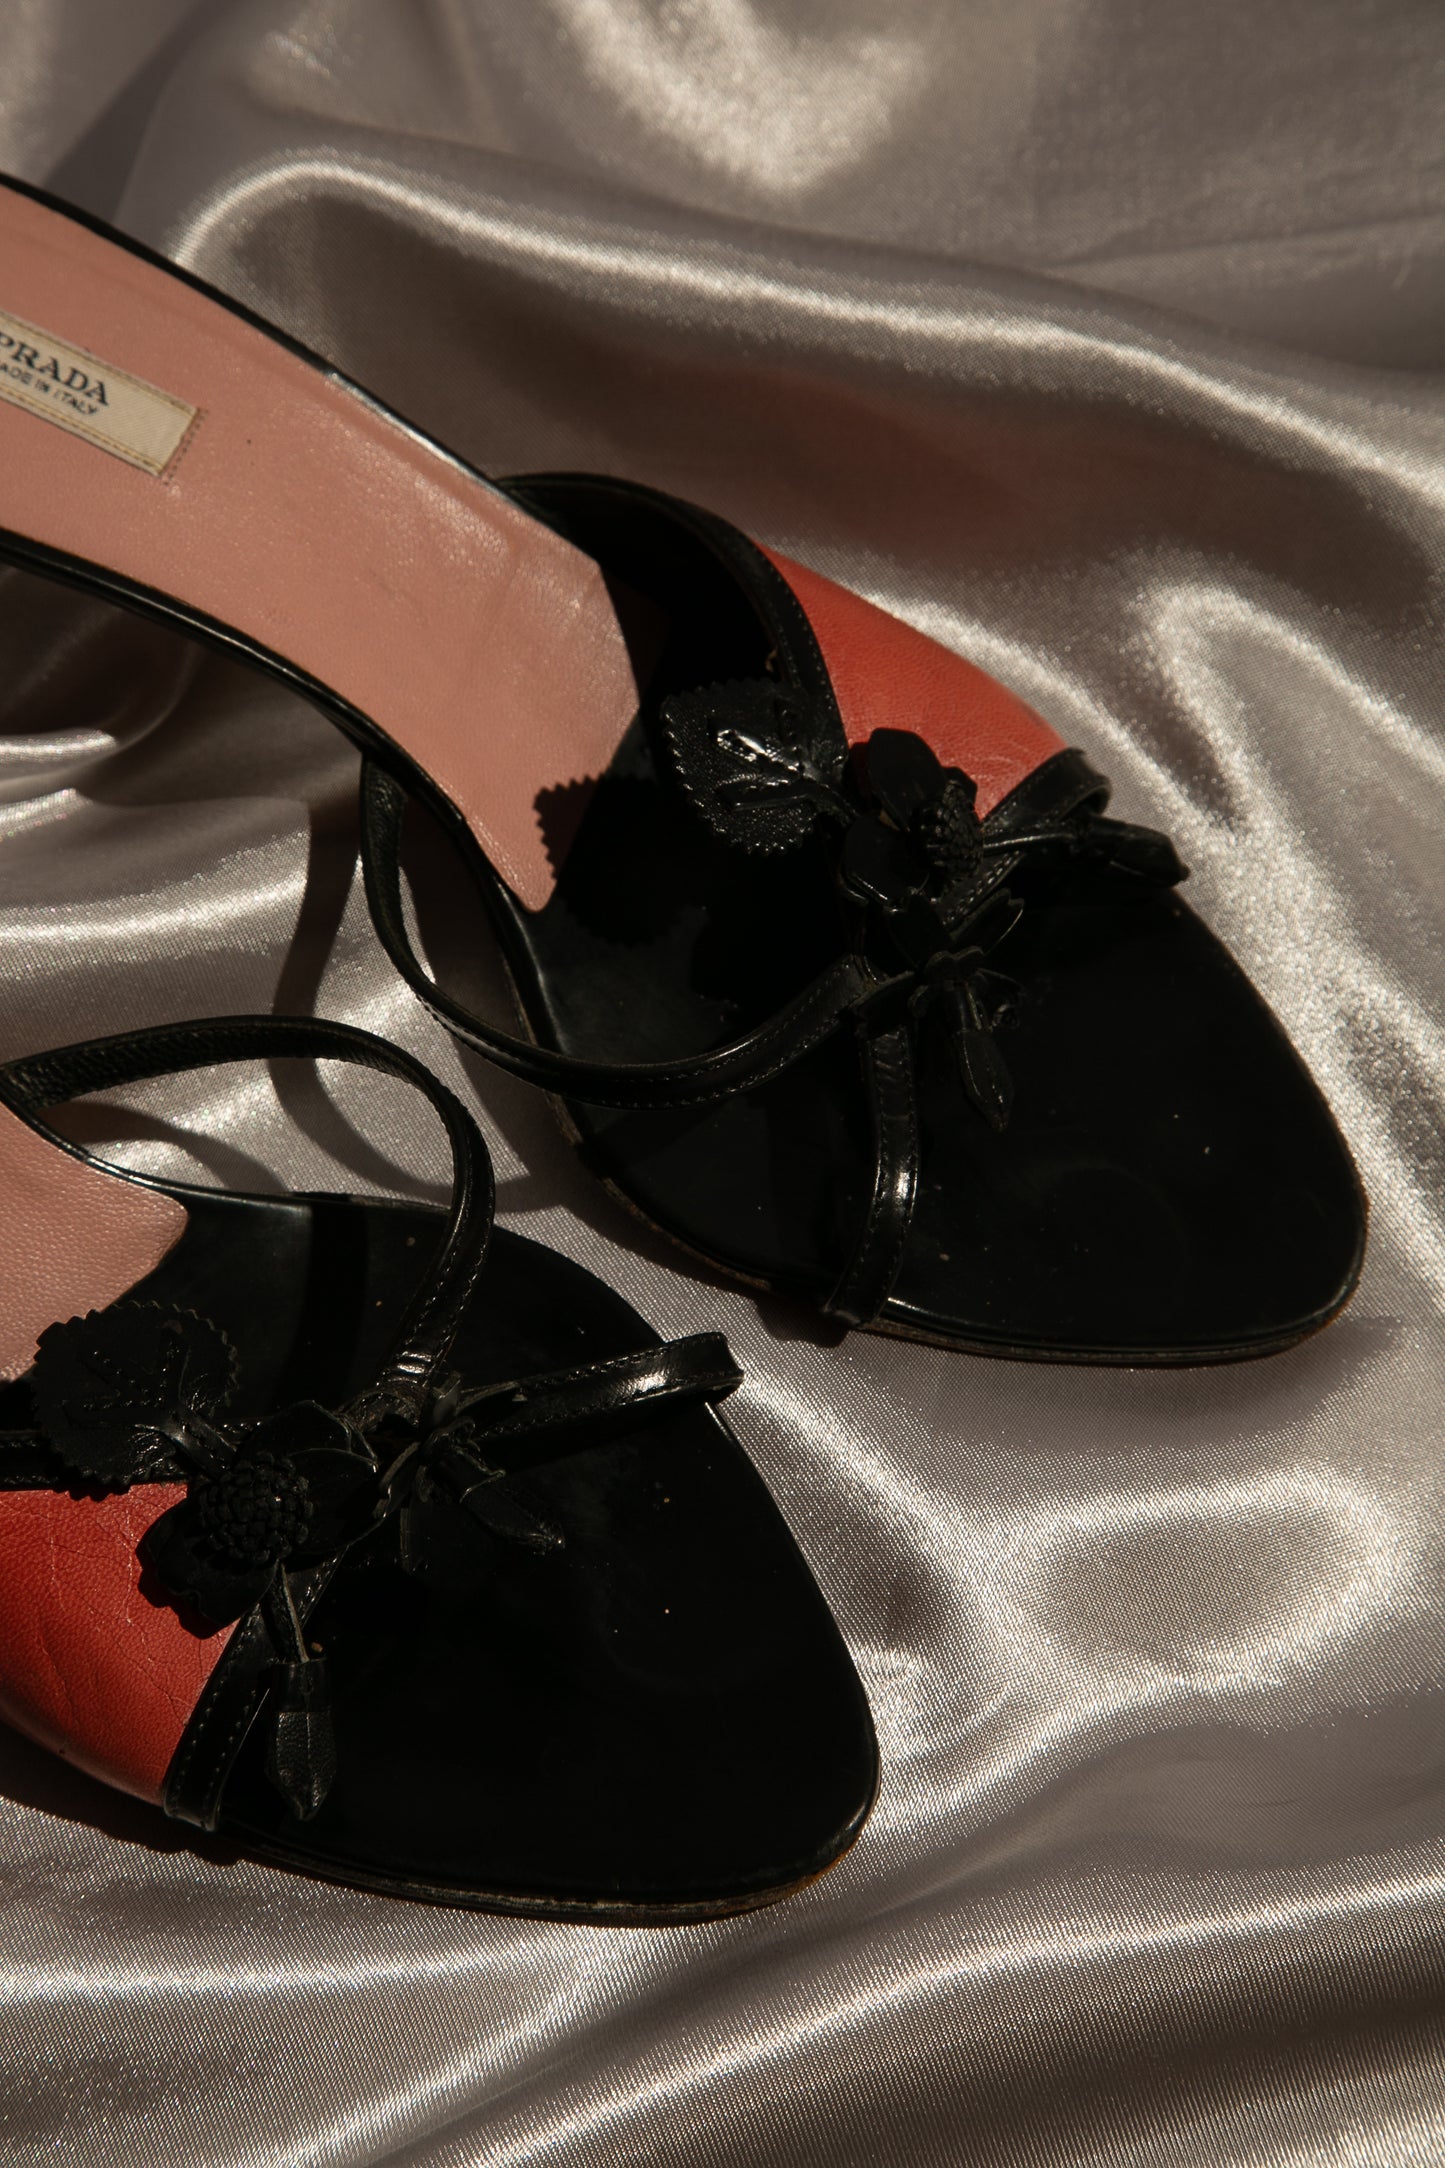 Extremely Rare Prada Pink & Black Floral Sandals